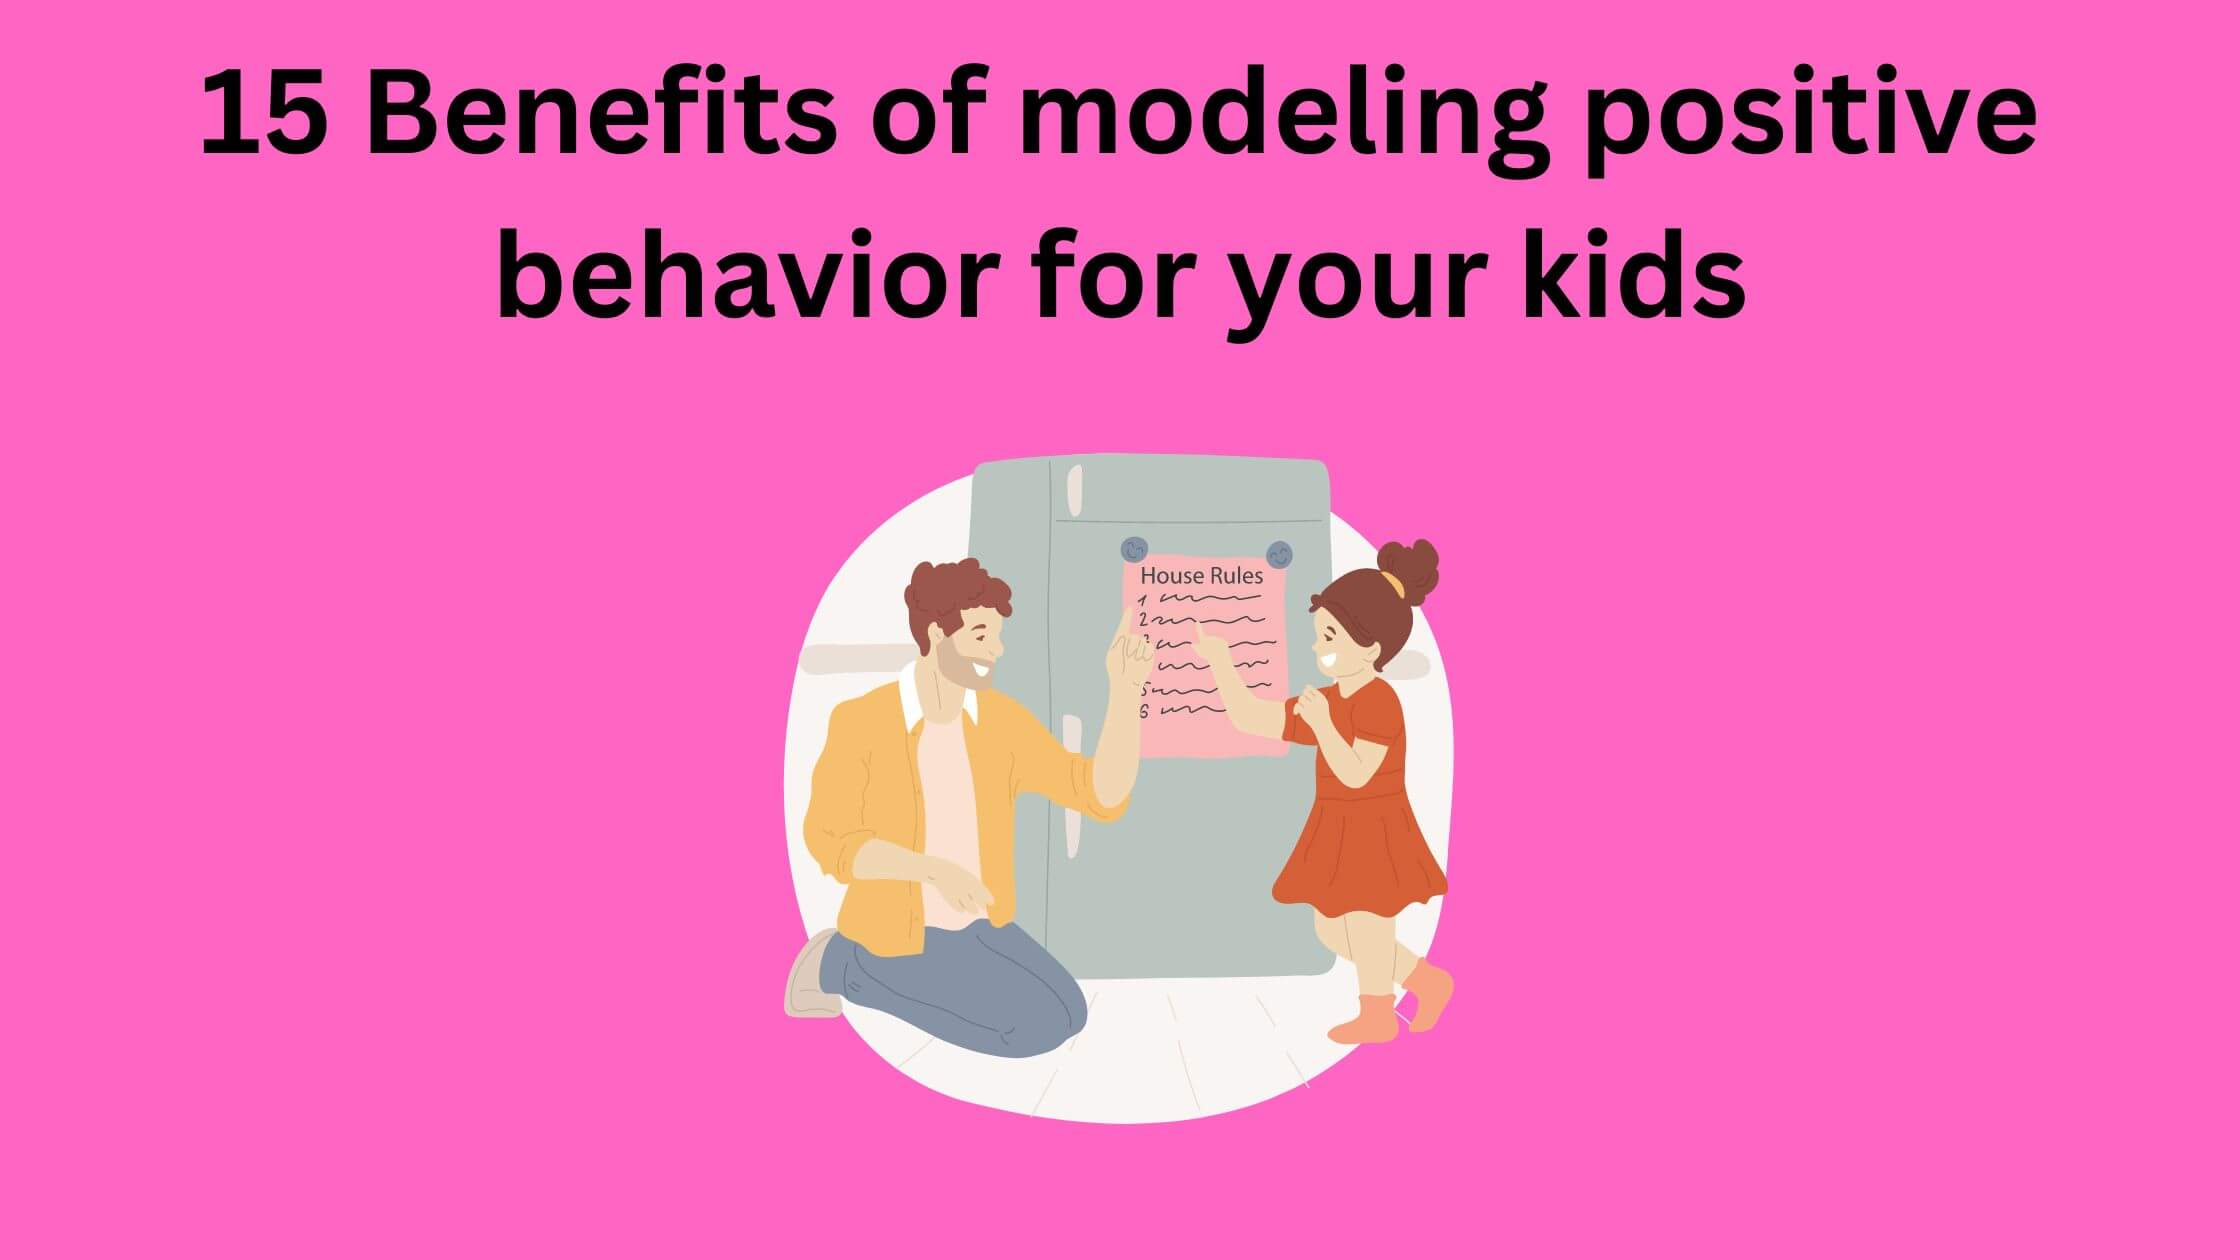 Benefits of modeling positive behavior for your kids